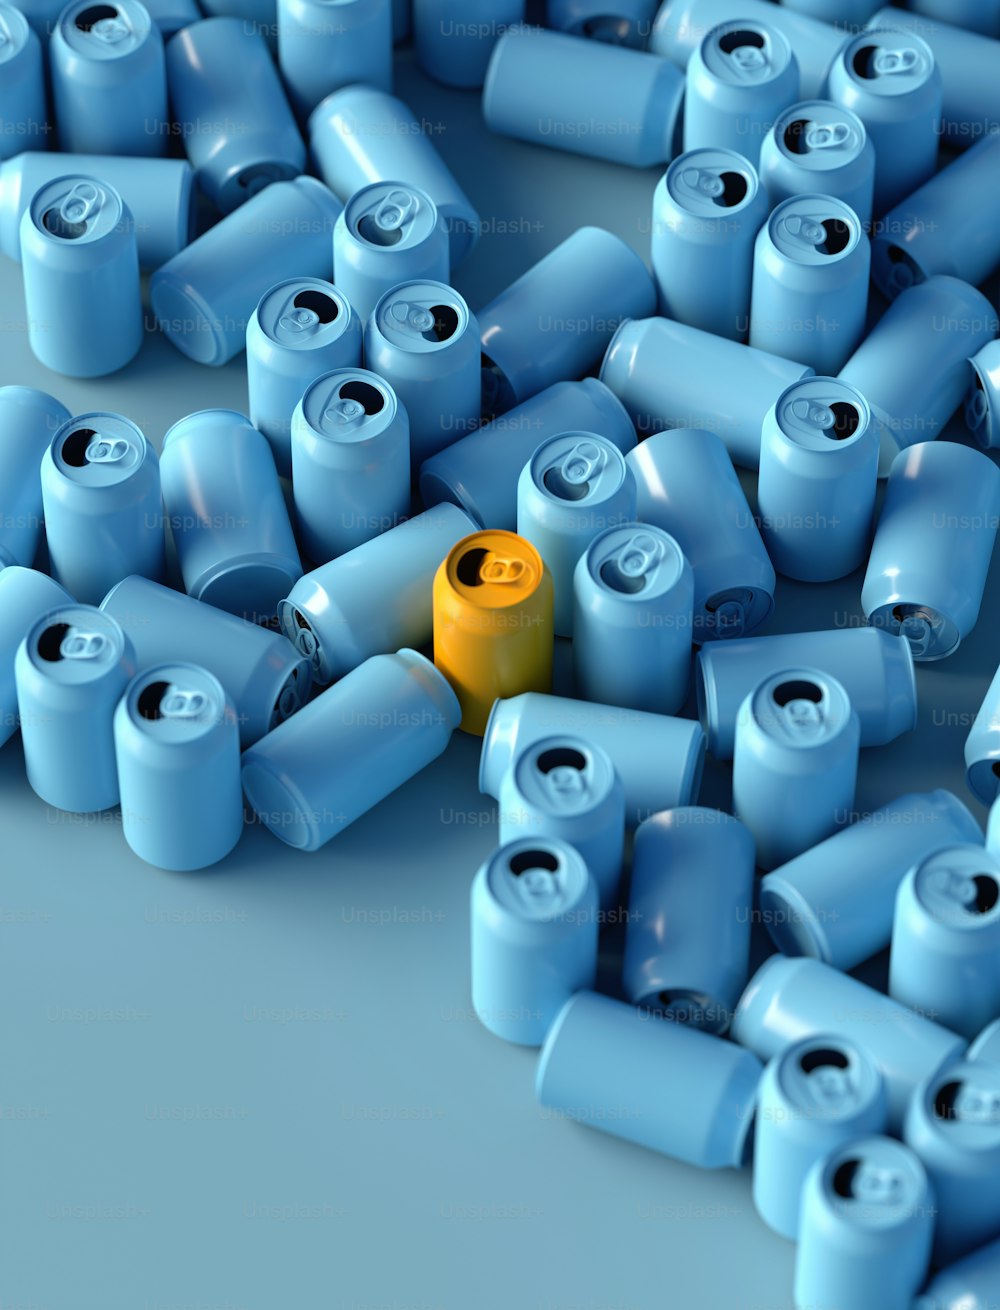 Un objeto amarillo está rodeado por muchos objetos azules